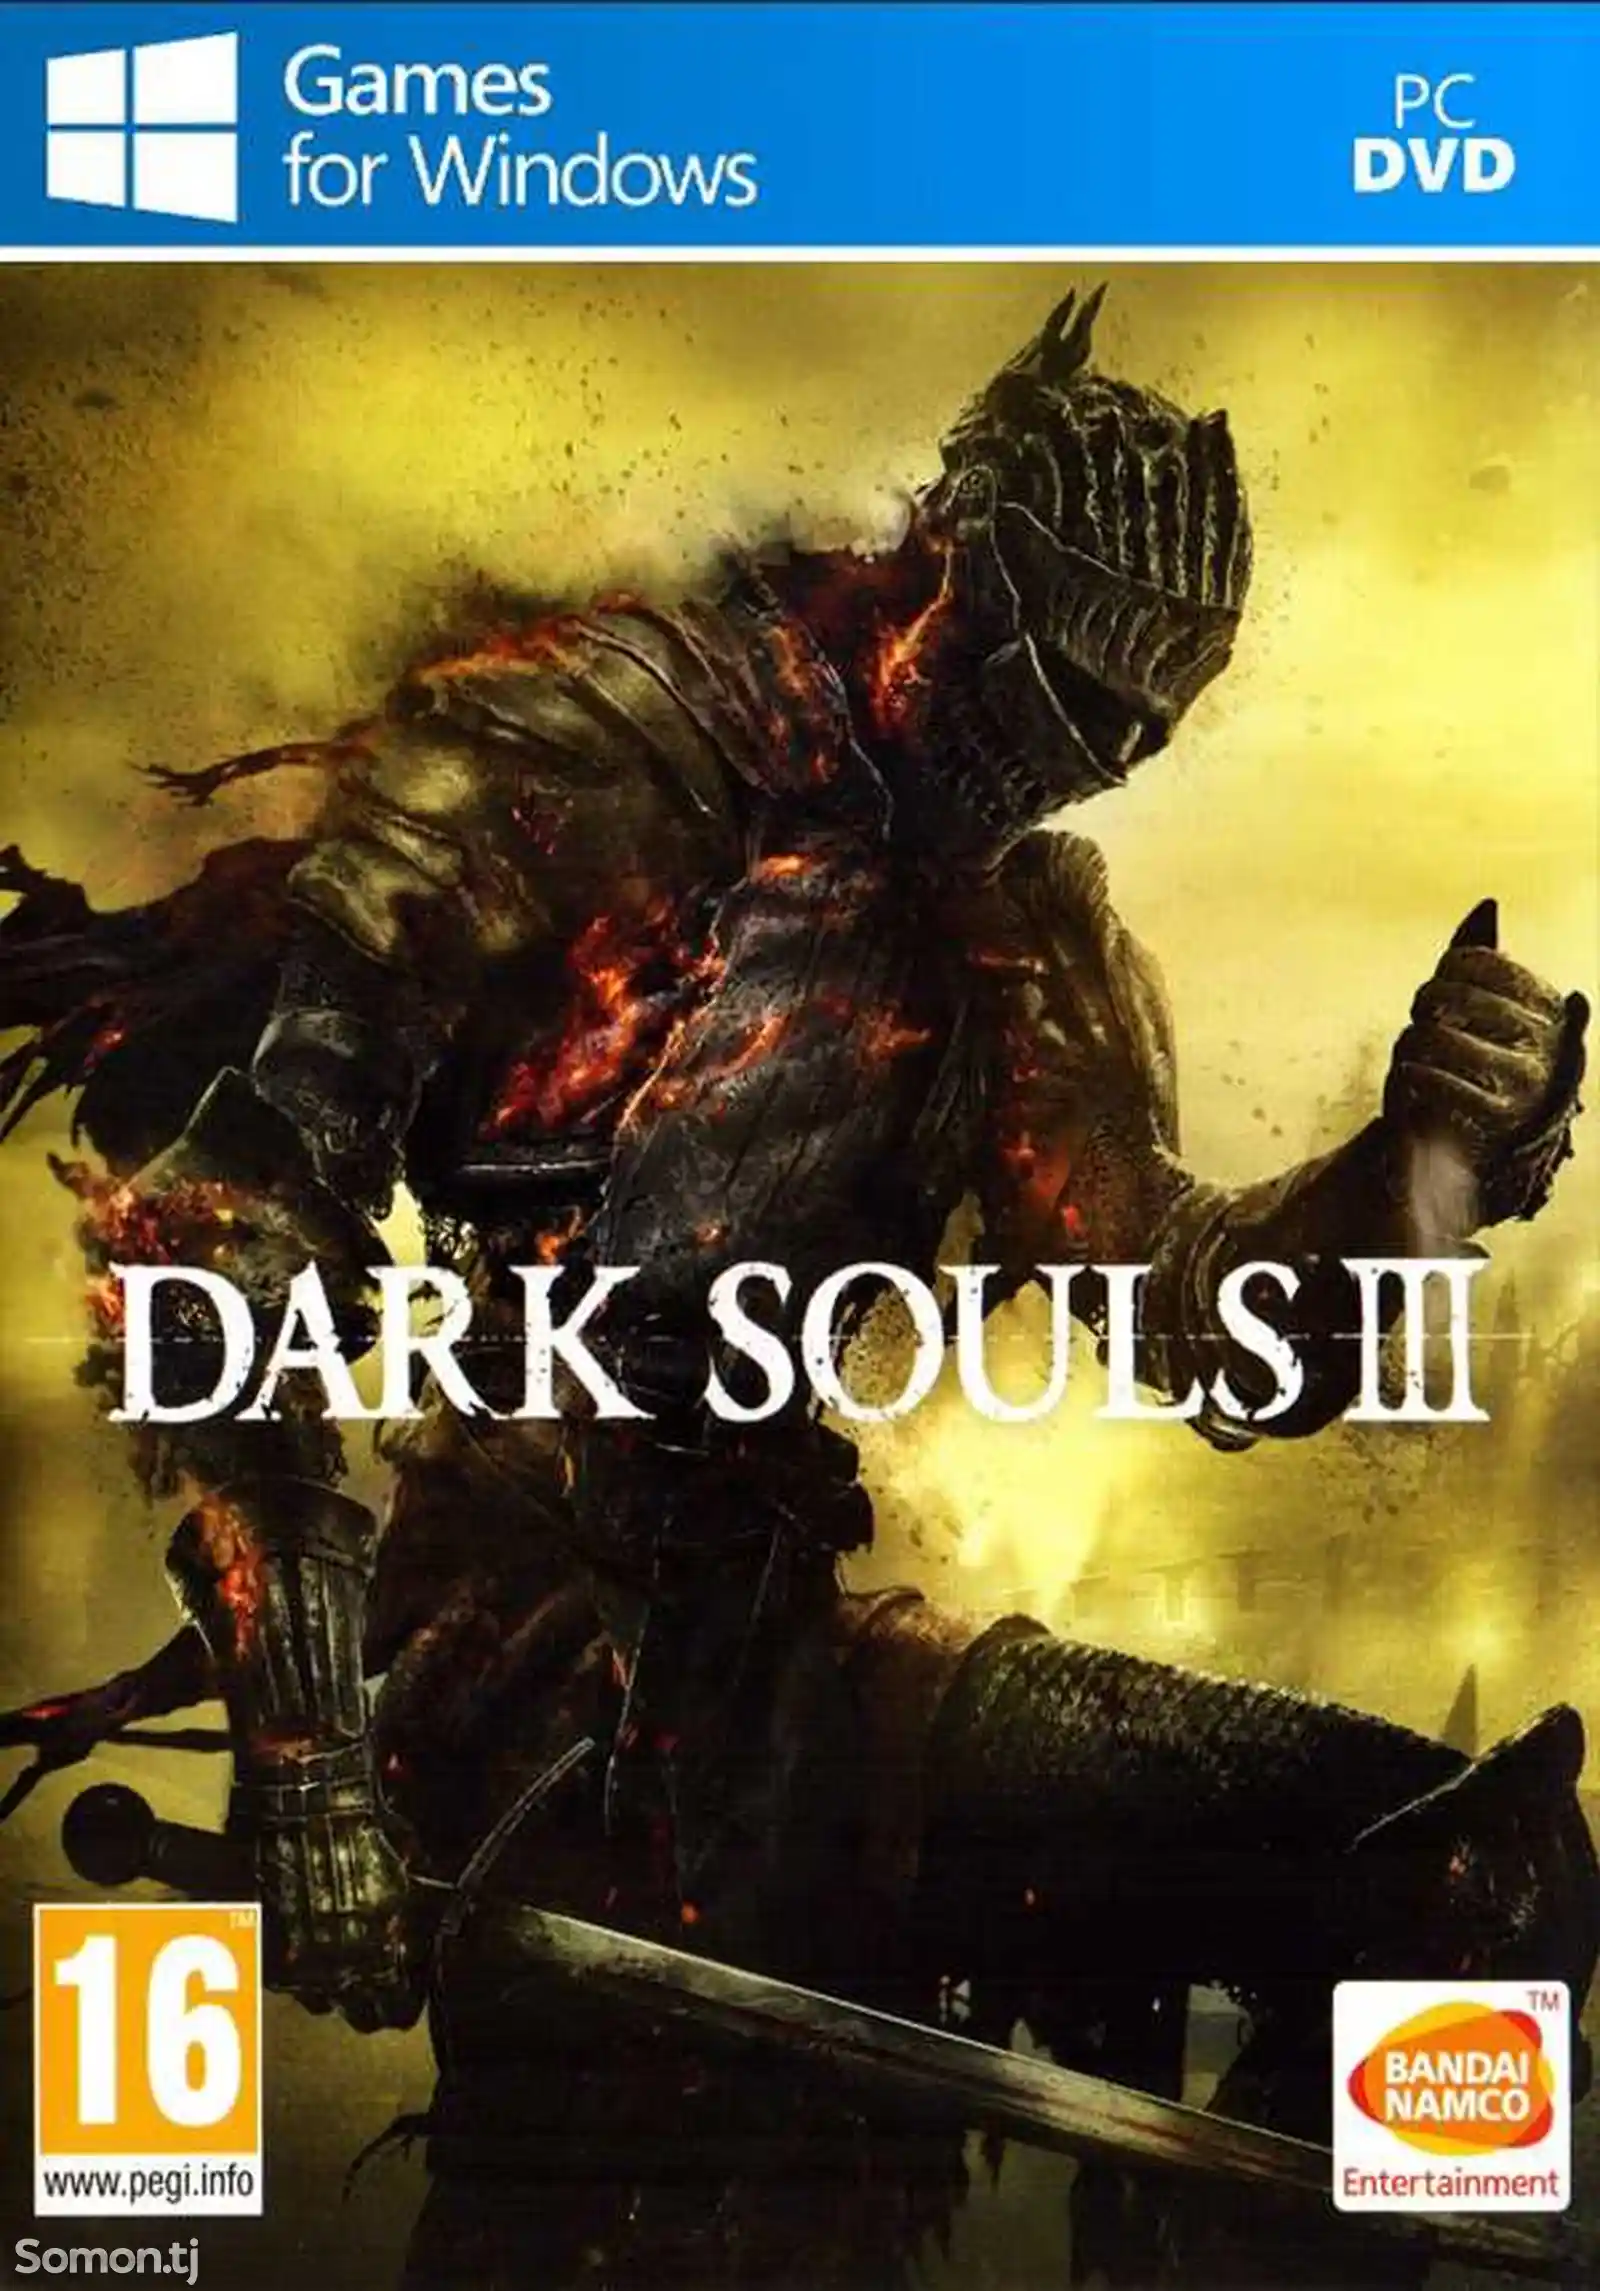 Игра Dark souls 3 для компьютера-пк-pc-1